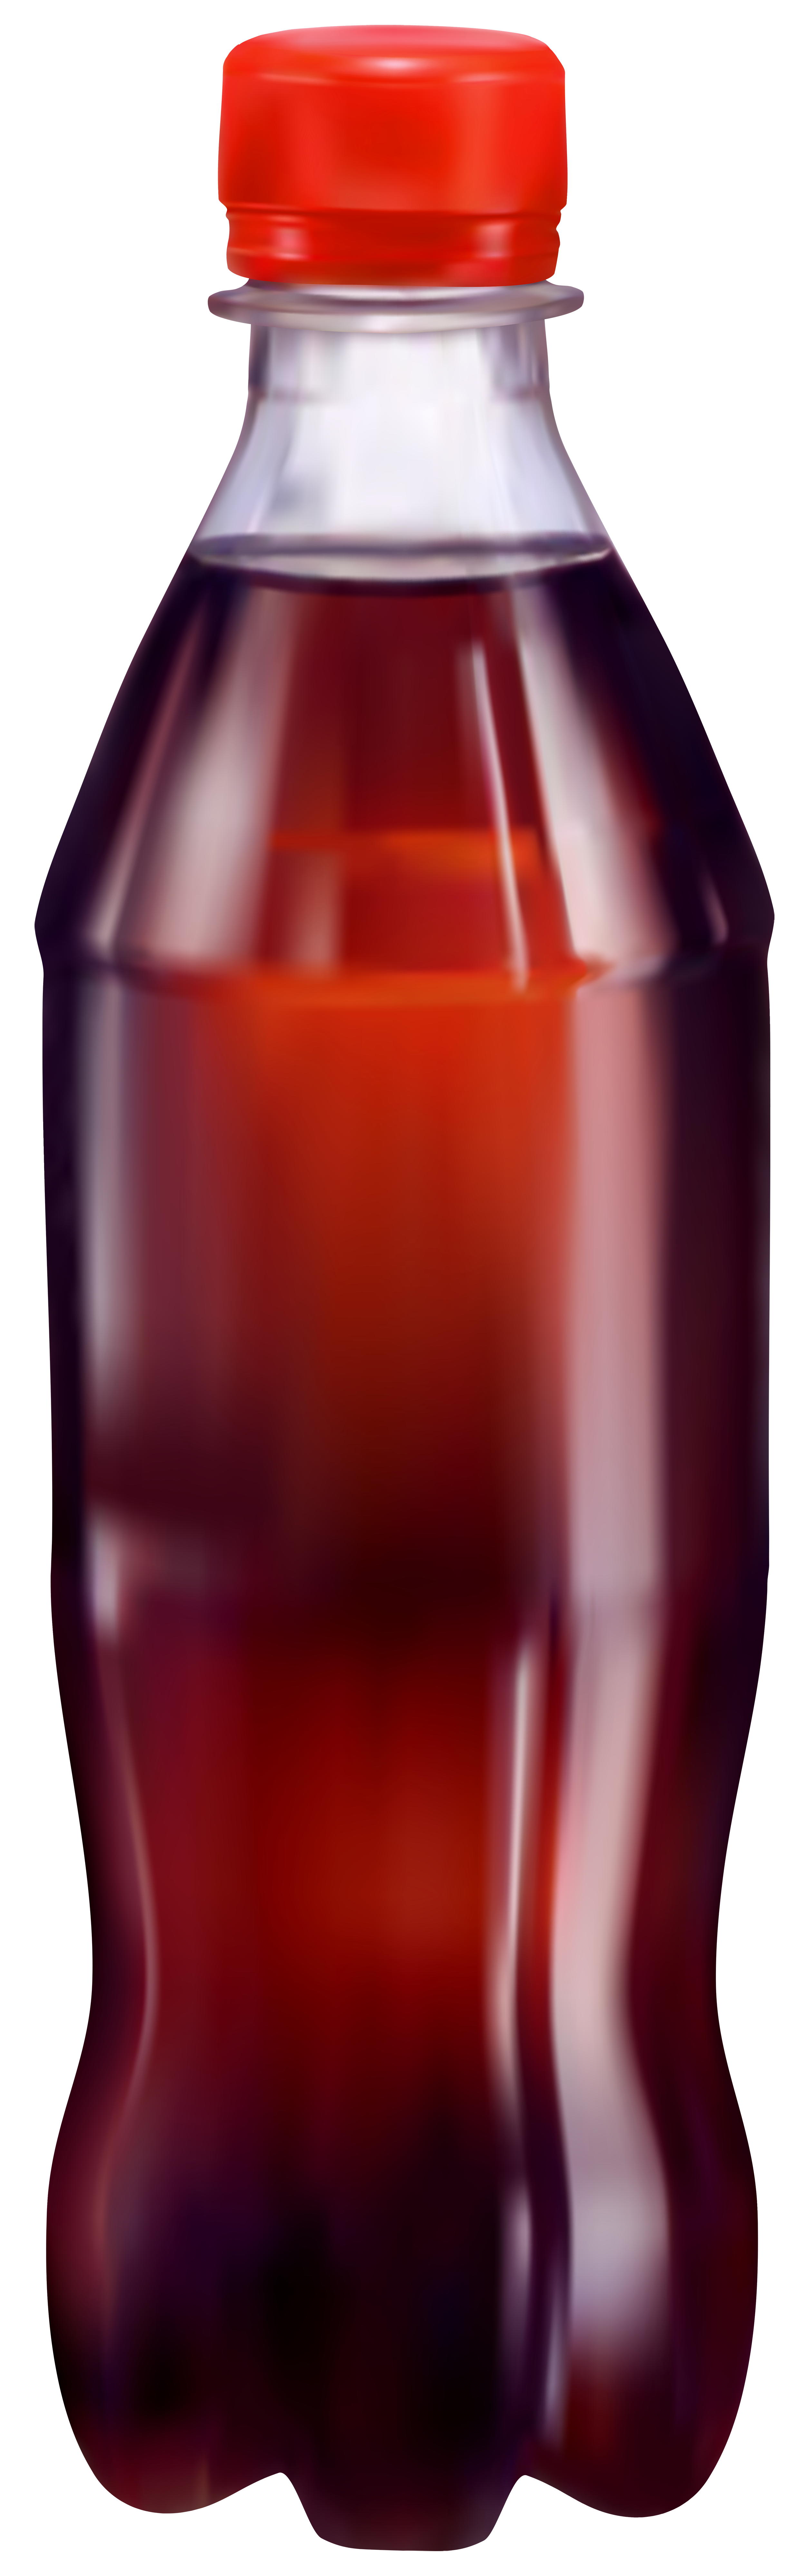 Coca cola clip art. Soda bottle png